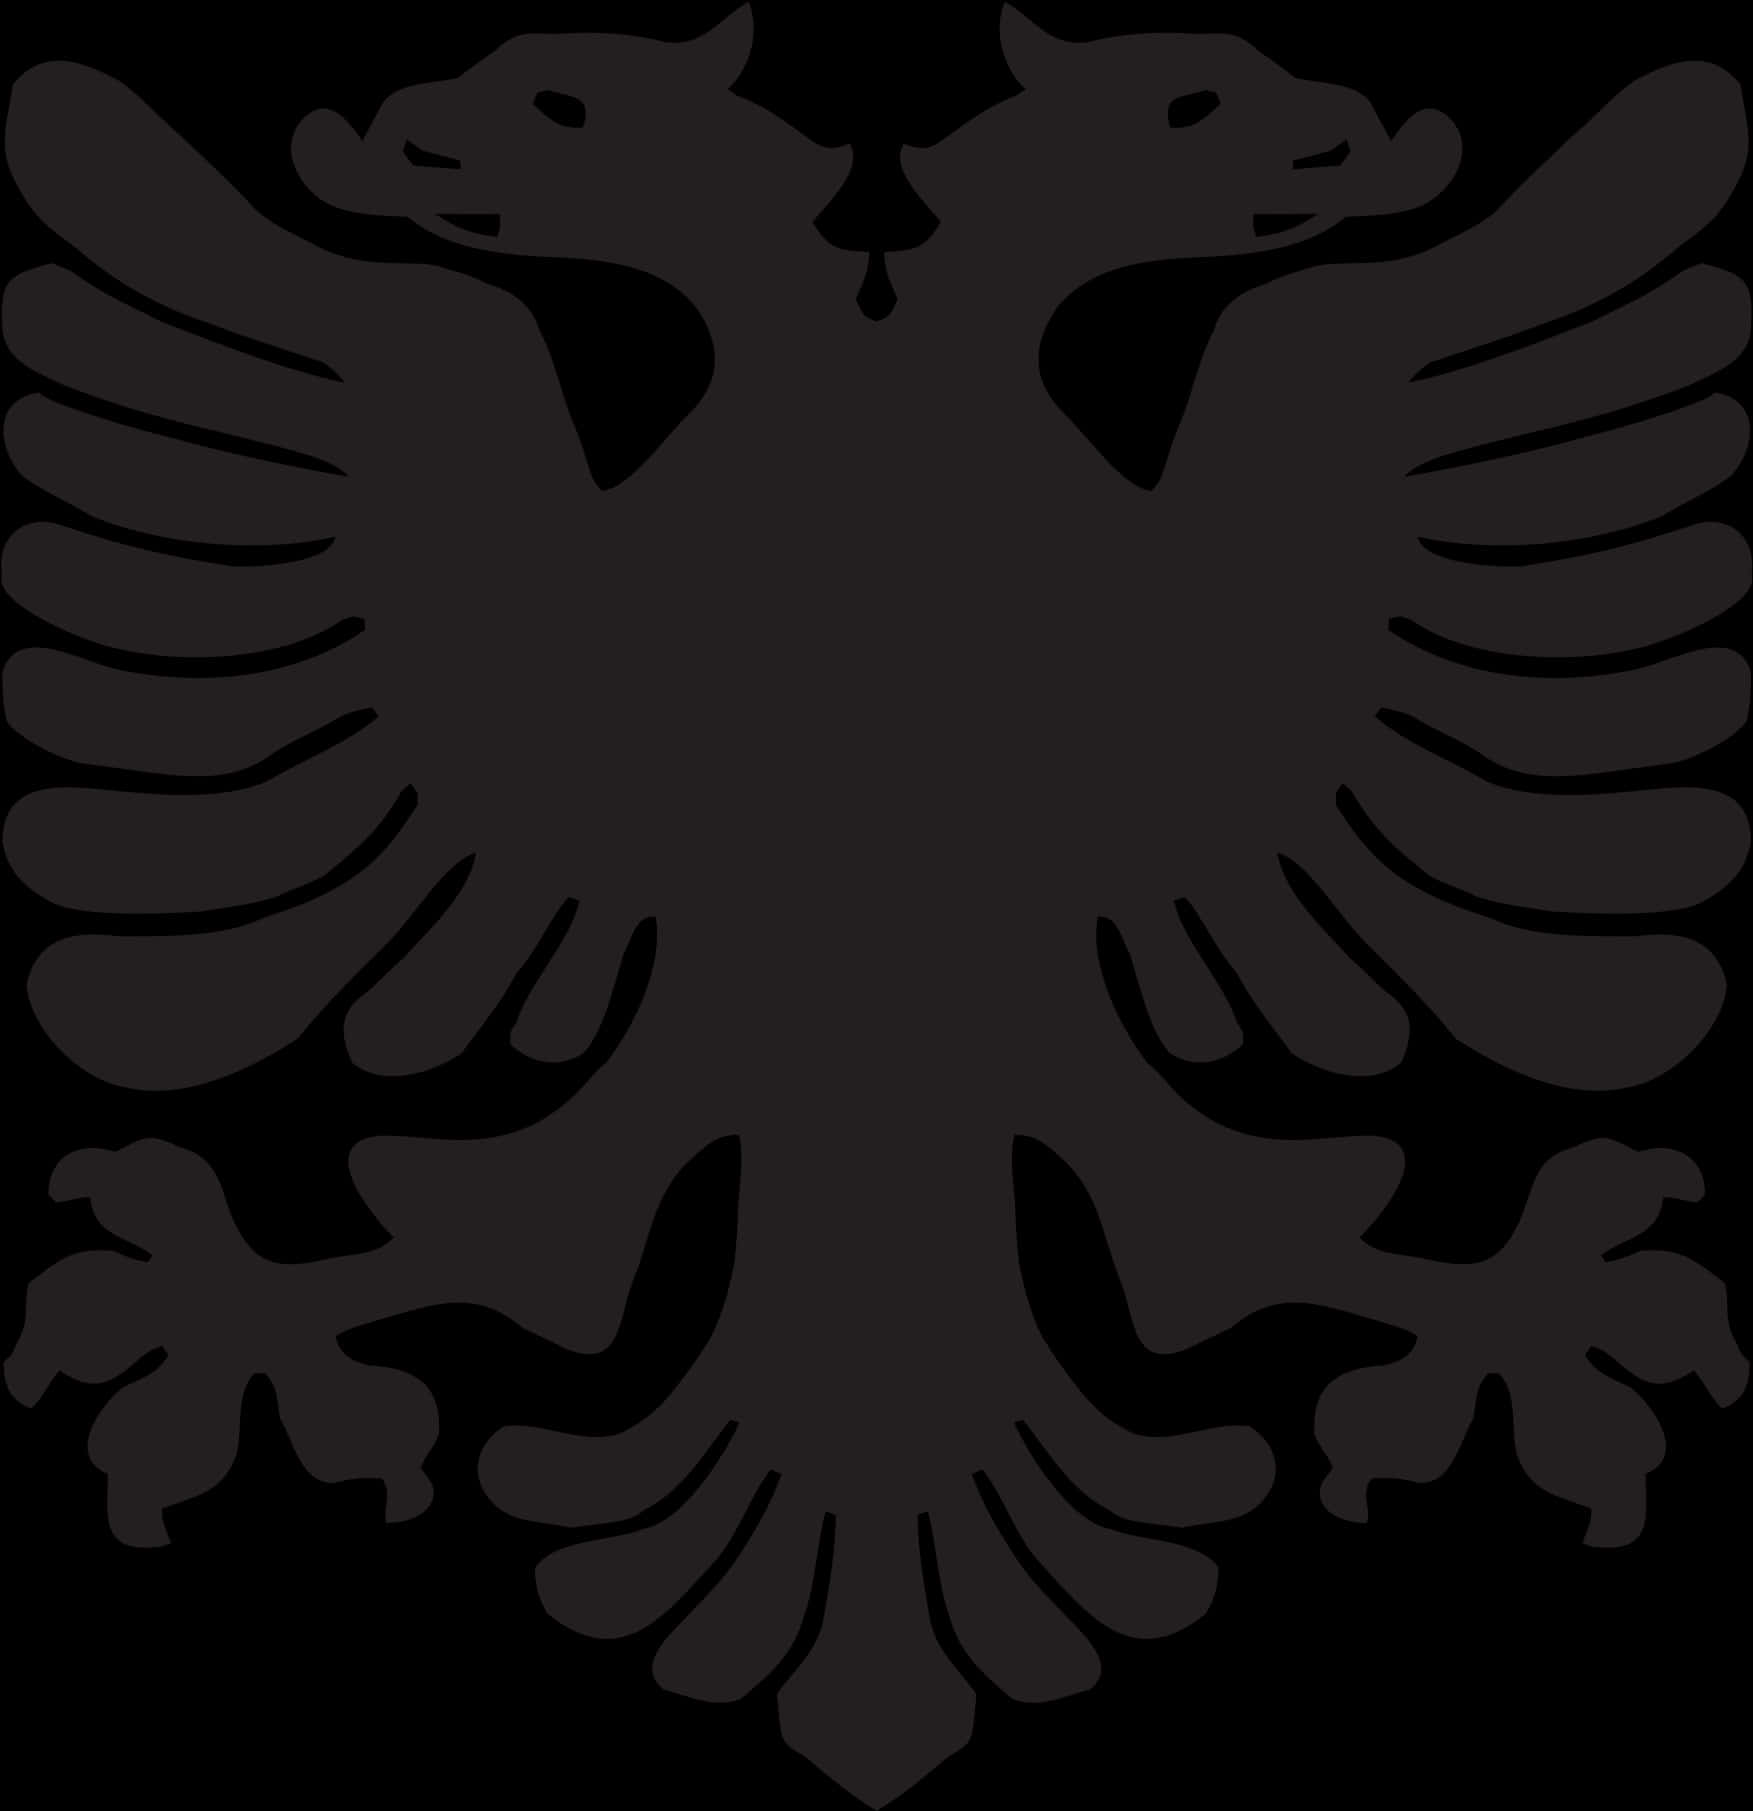 A Black Double Headed Eagle